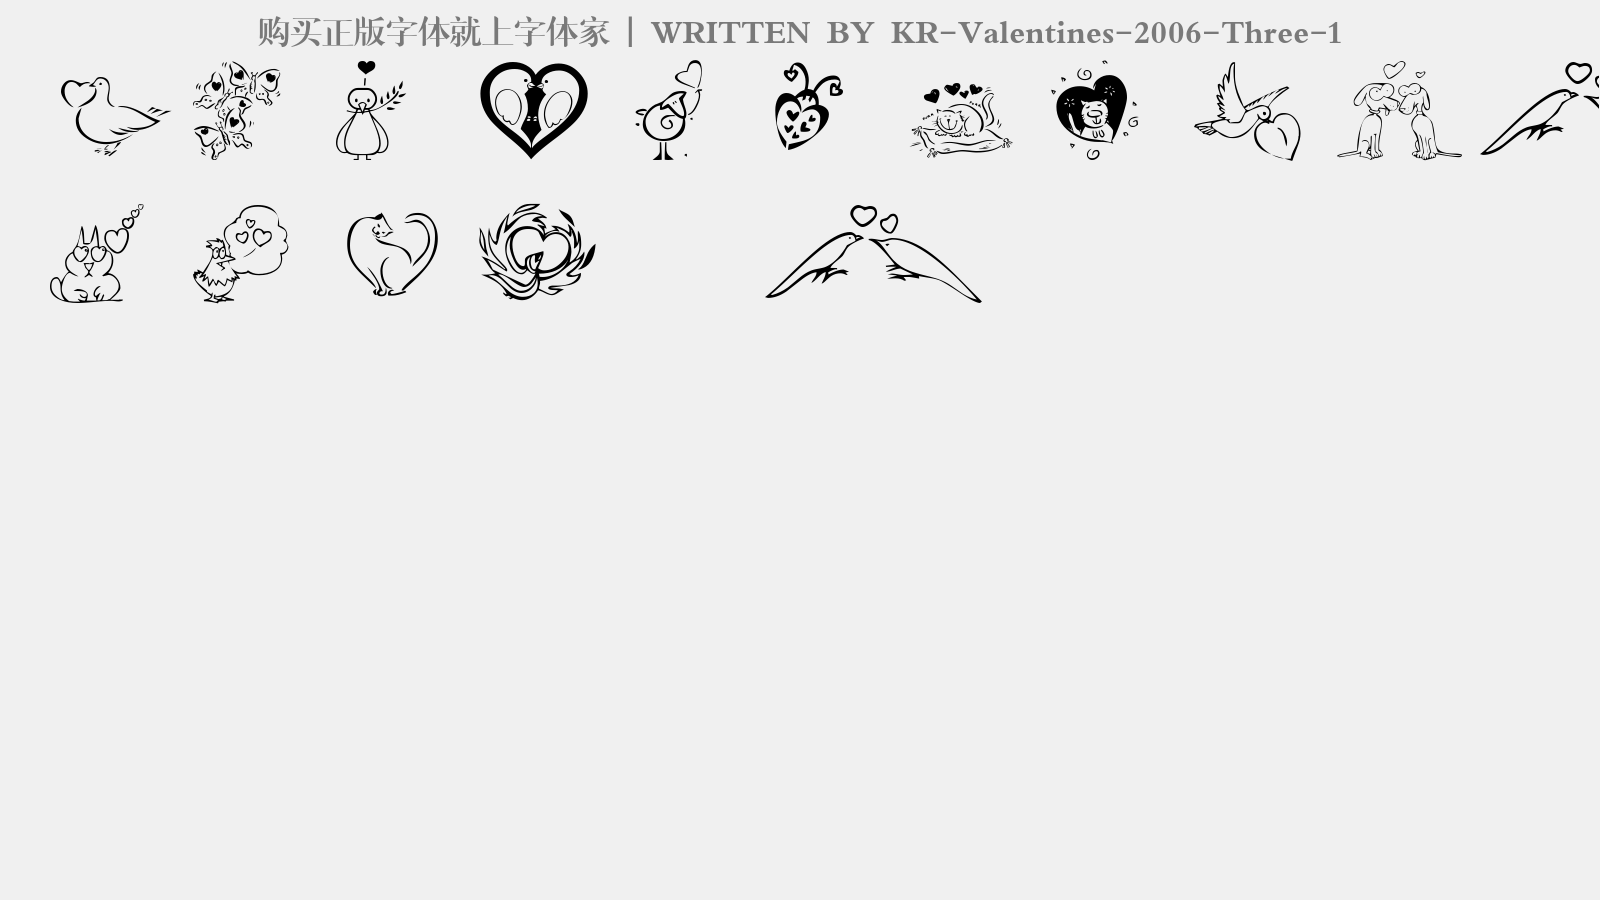 KR-Valentines-2006-Three-1 - 大写字母/小写字母/数字